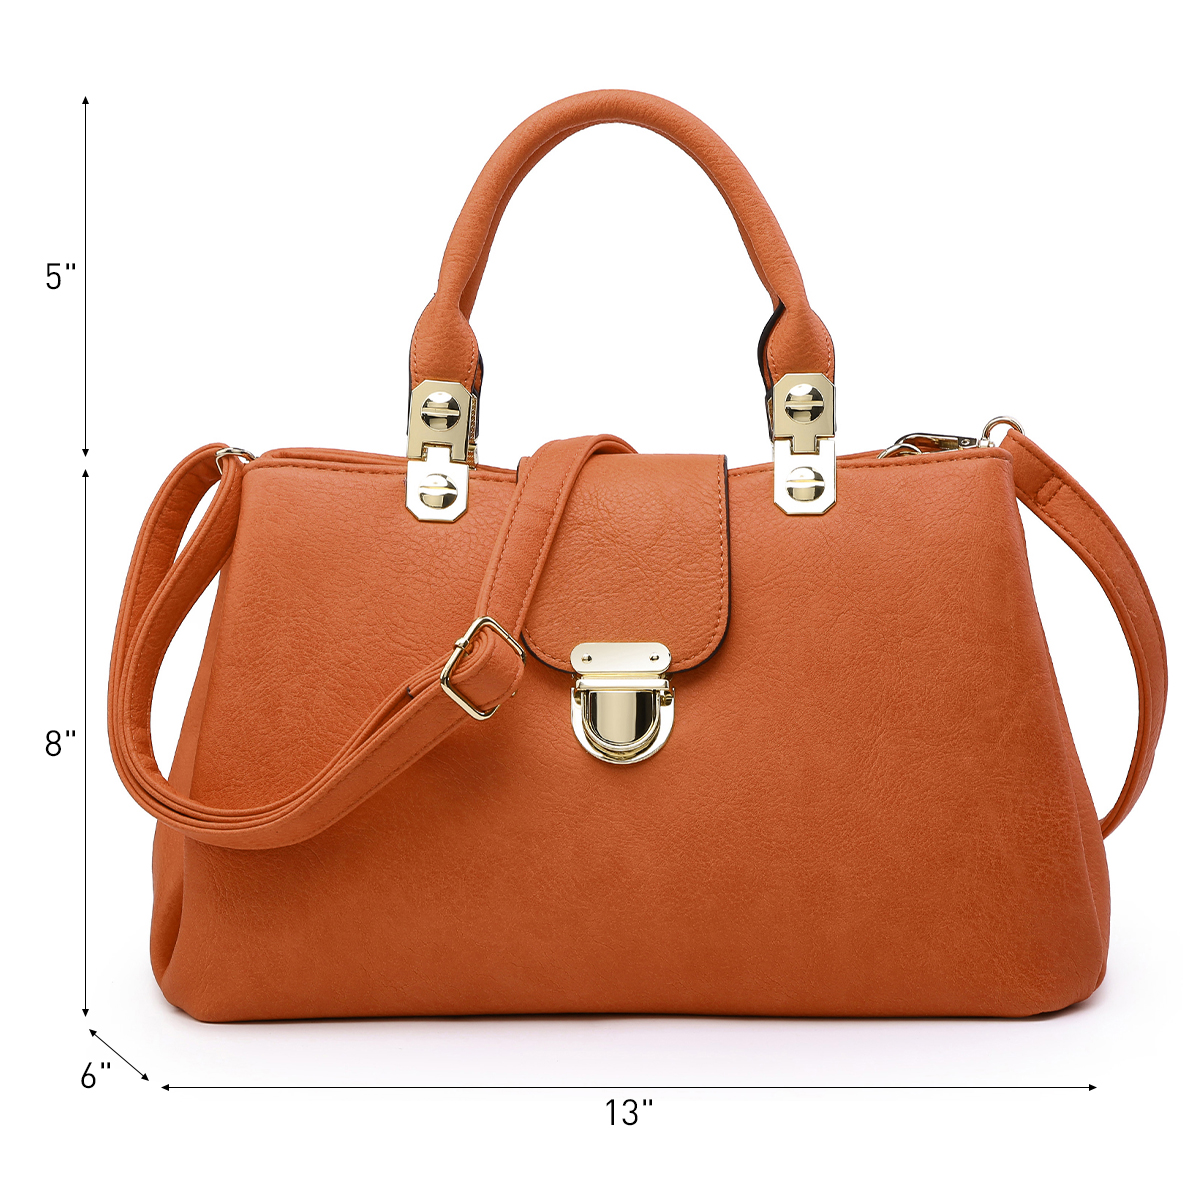 Dasein Women Satchel Handbags Top Handle Purse Medium Tote Bag Vegan Leather Shoulder Bag - image 2 of 6